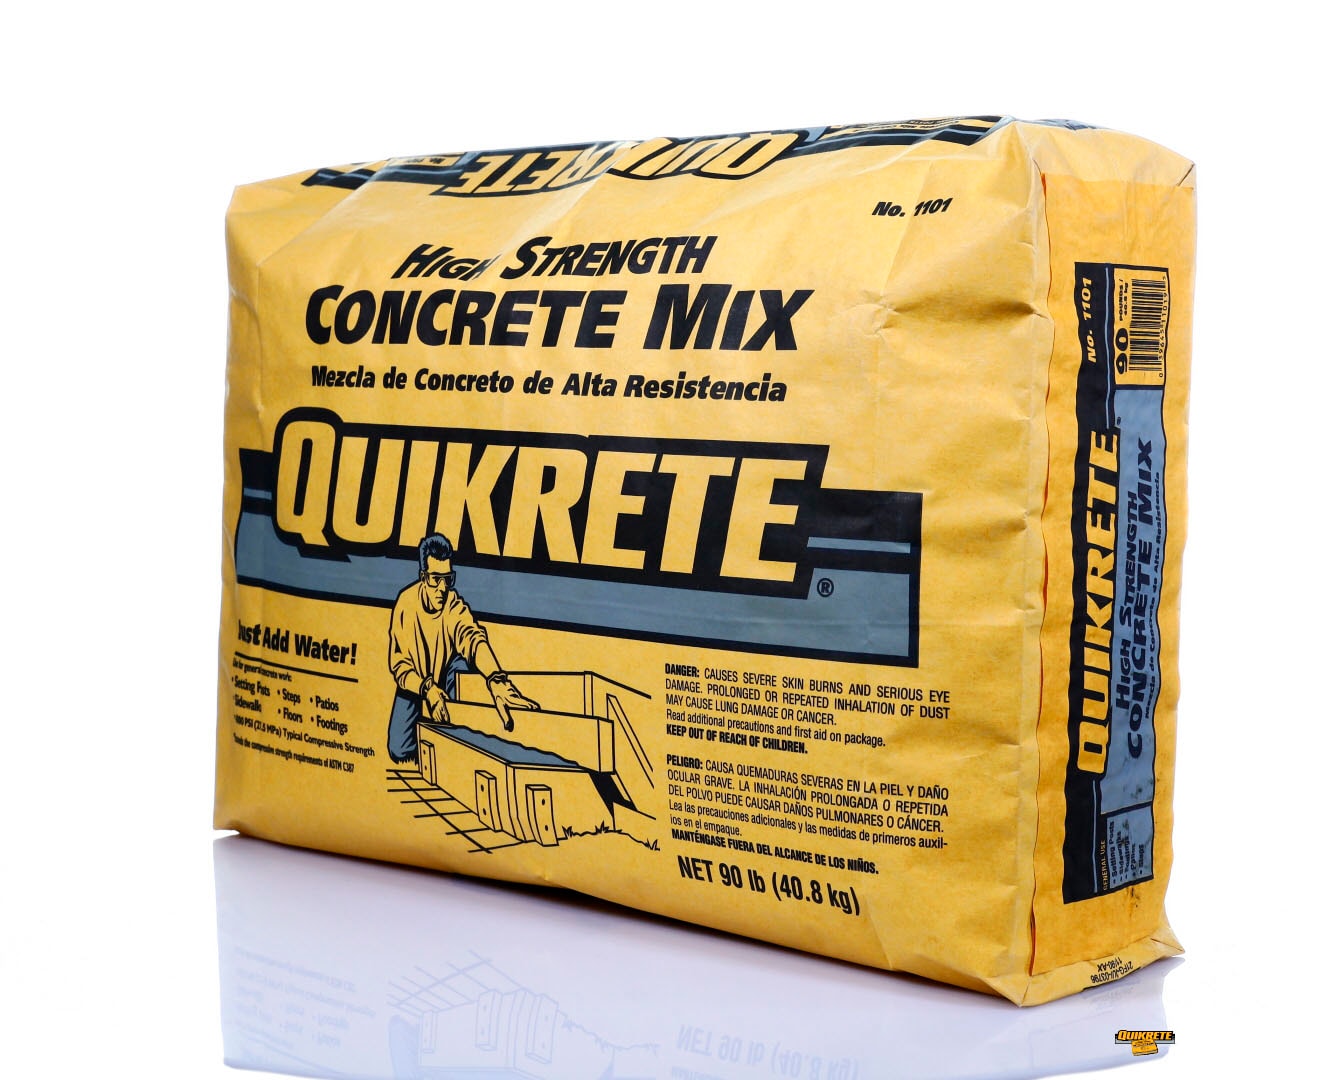 Quikrete 80 Concrete Mix 110180 The Home Depot, 43% OFF